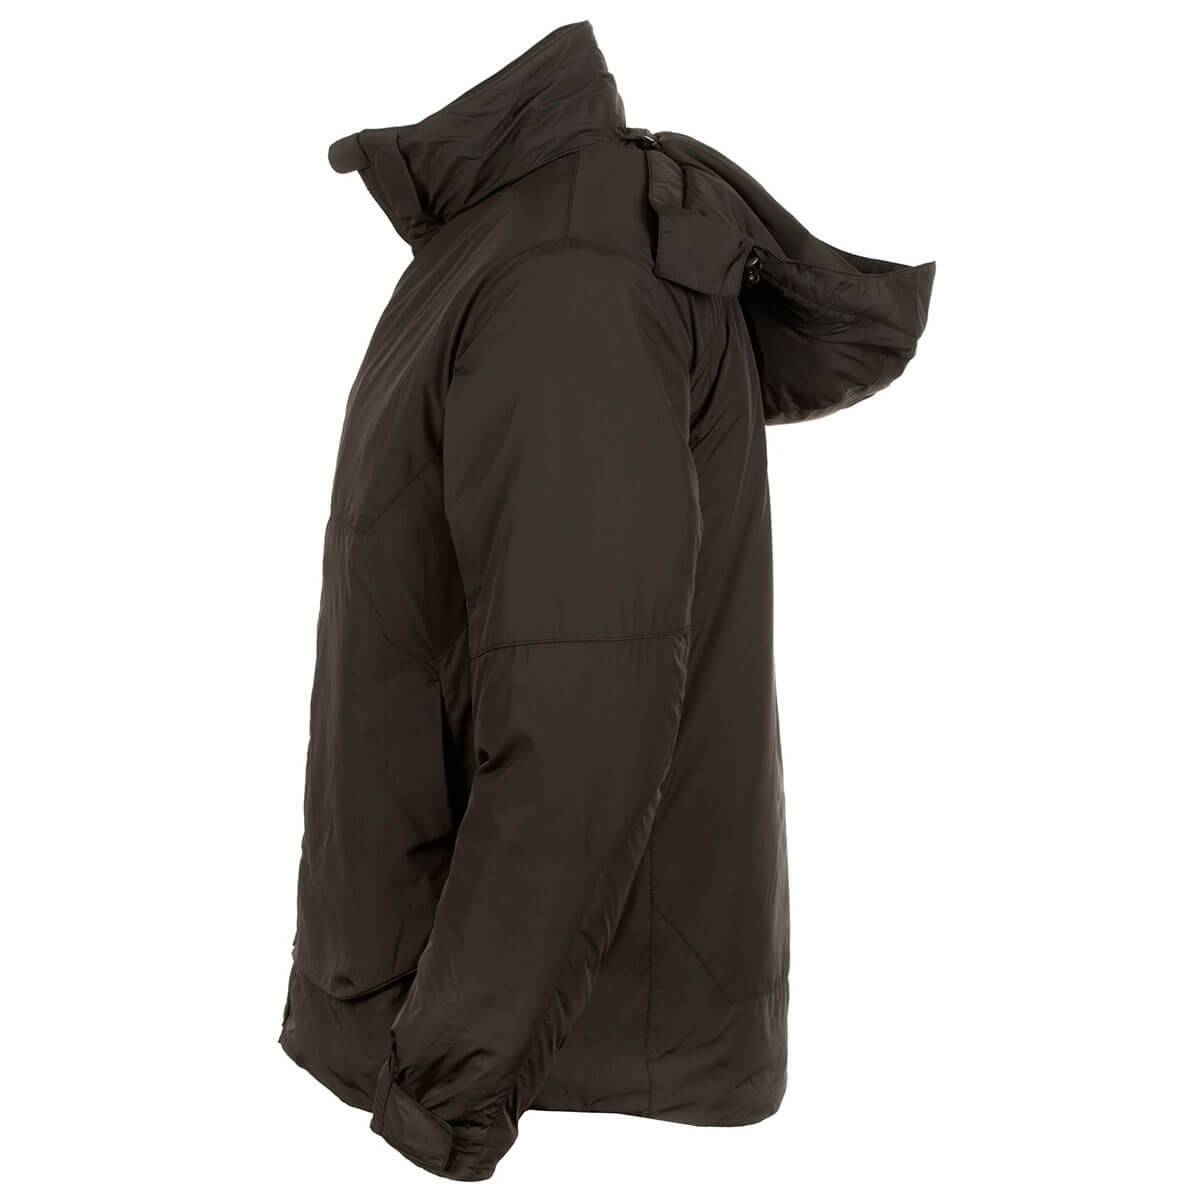 Snugpak Arrowhead Insulated Jacket Black - John Bull Clothing